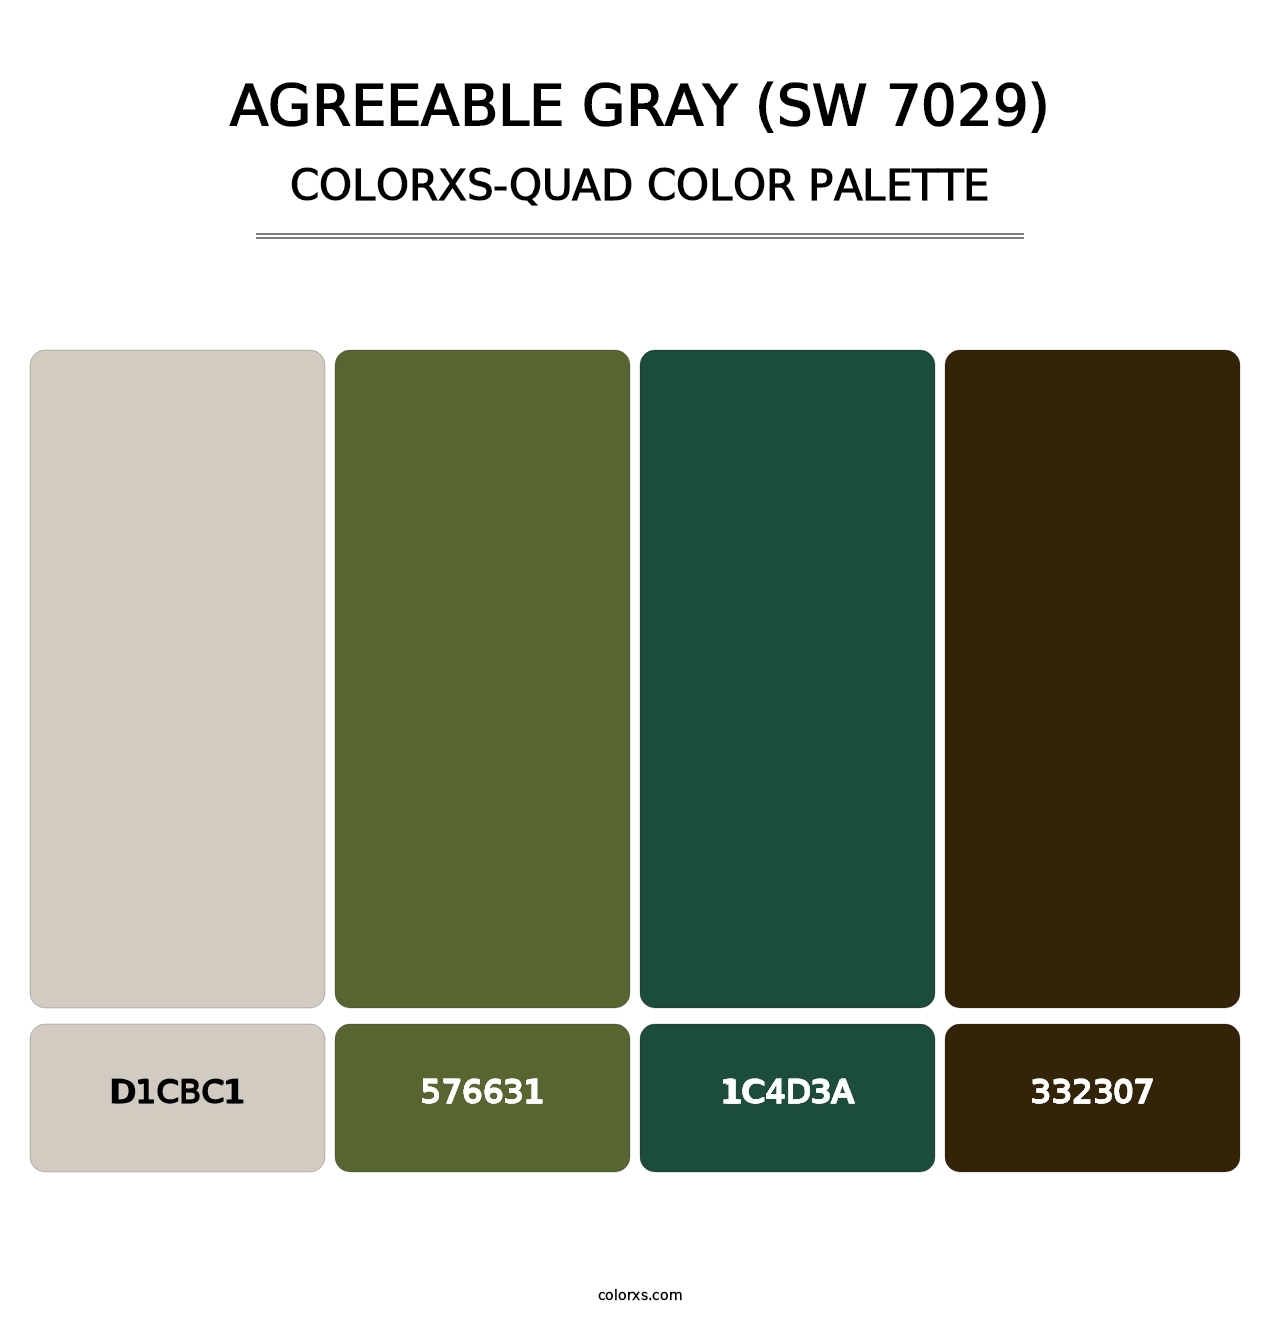 Agreeable Gray (SW 7029) - Colorxs Quad Palette